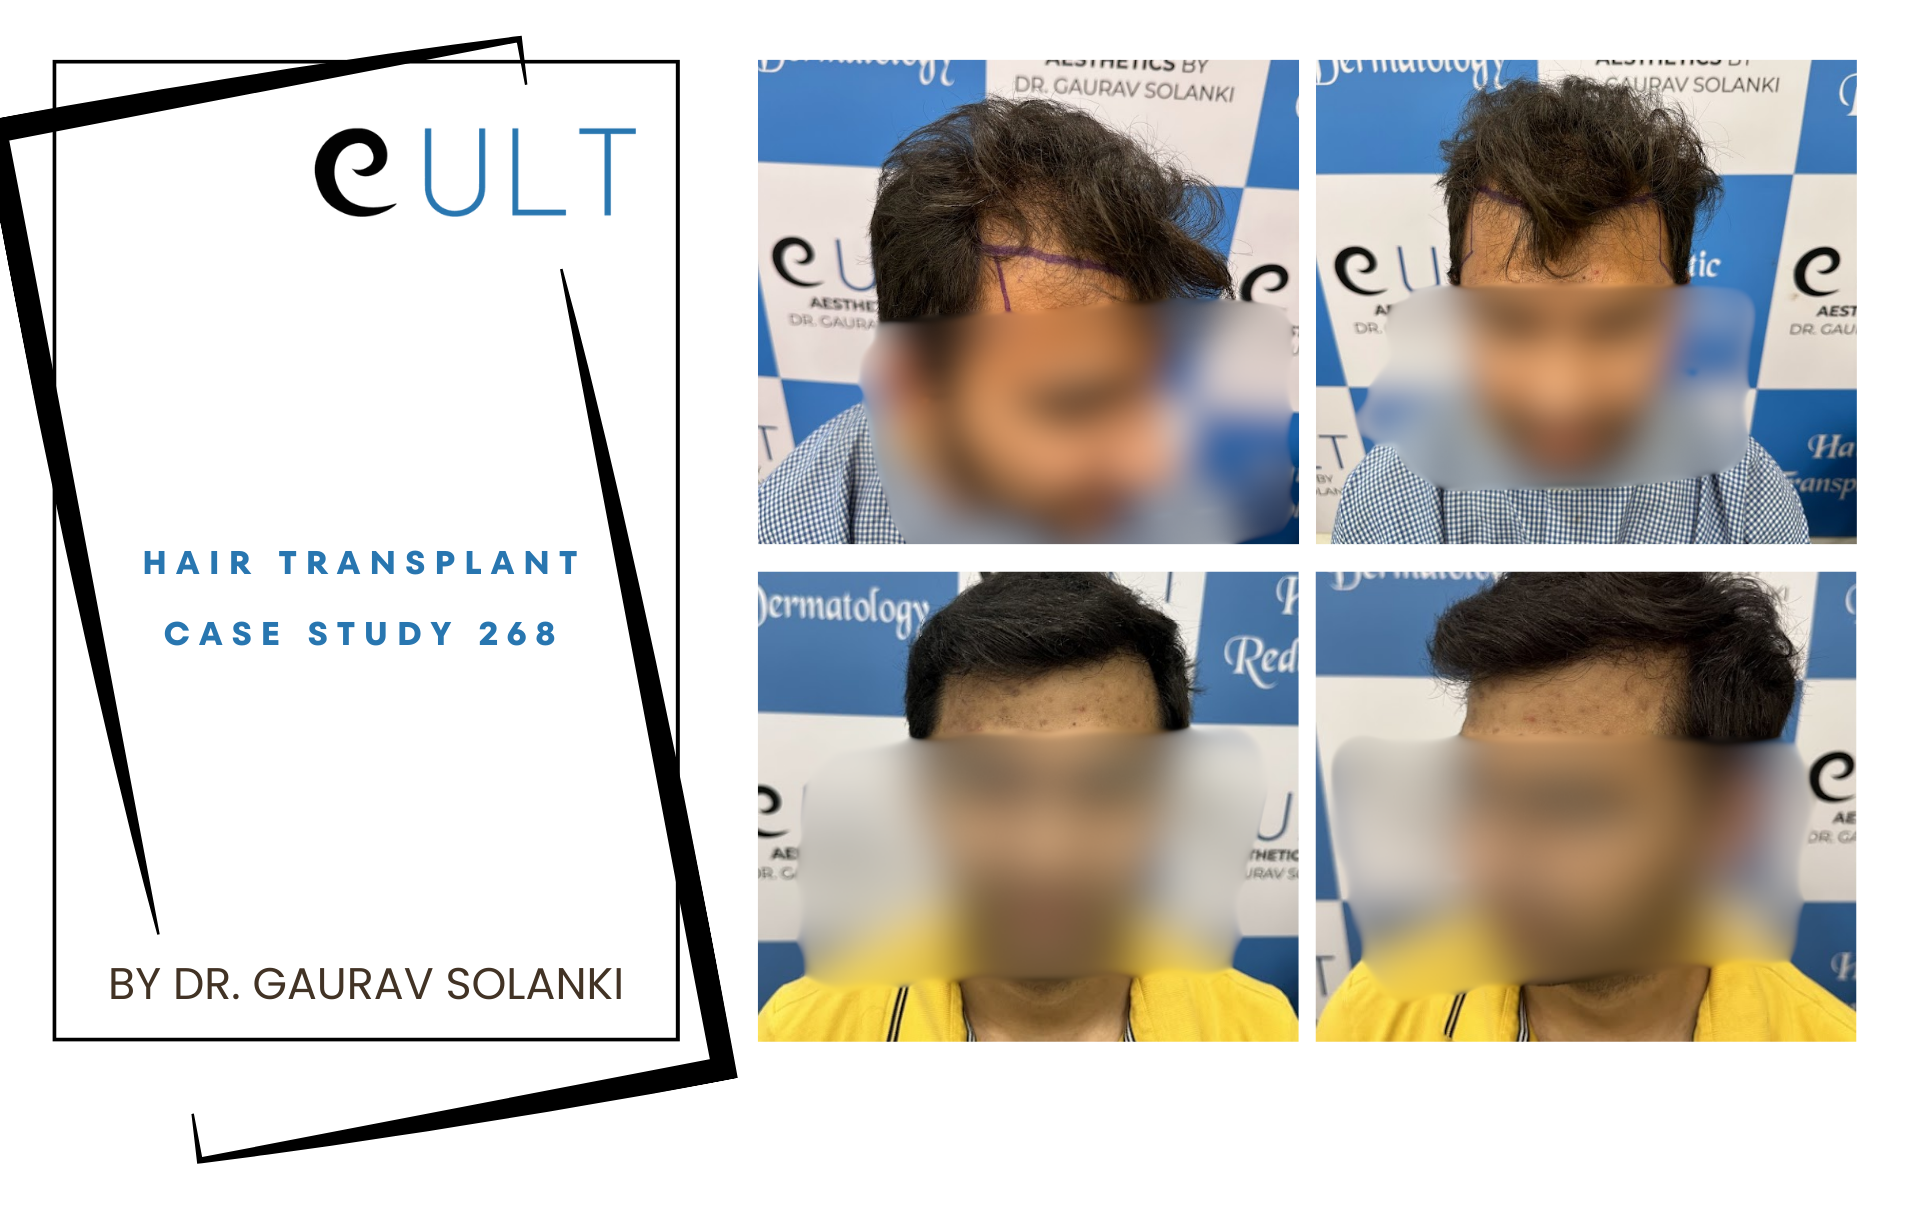 Hair Transplant case 268